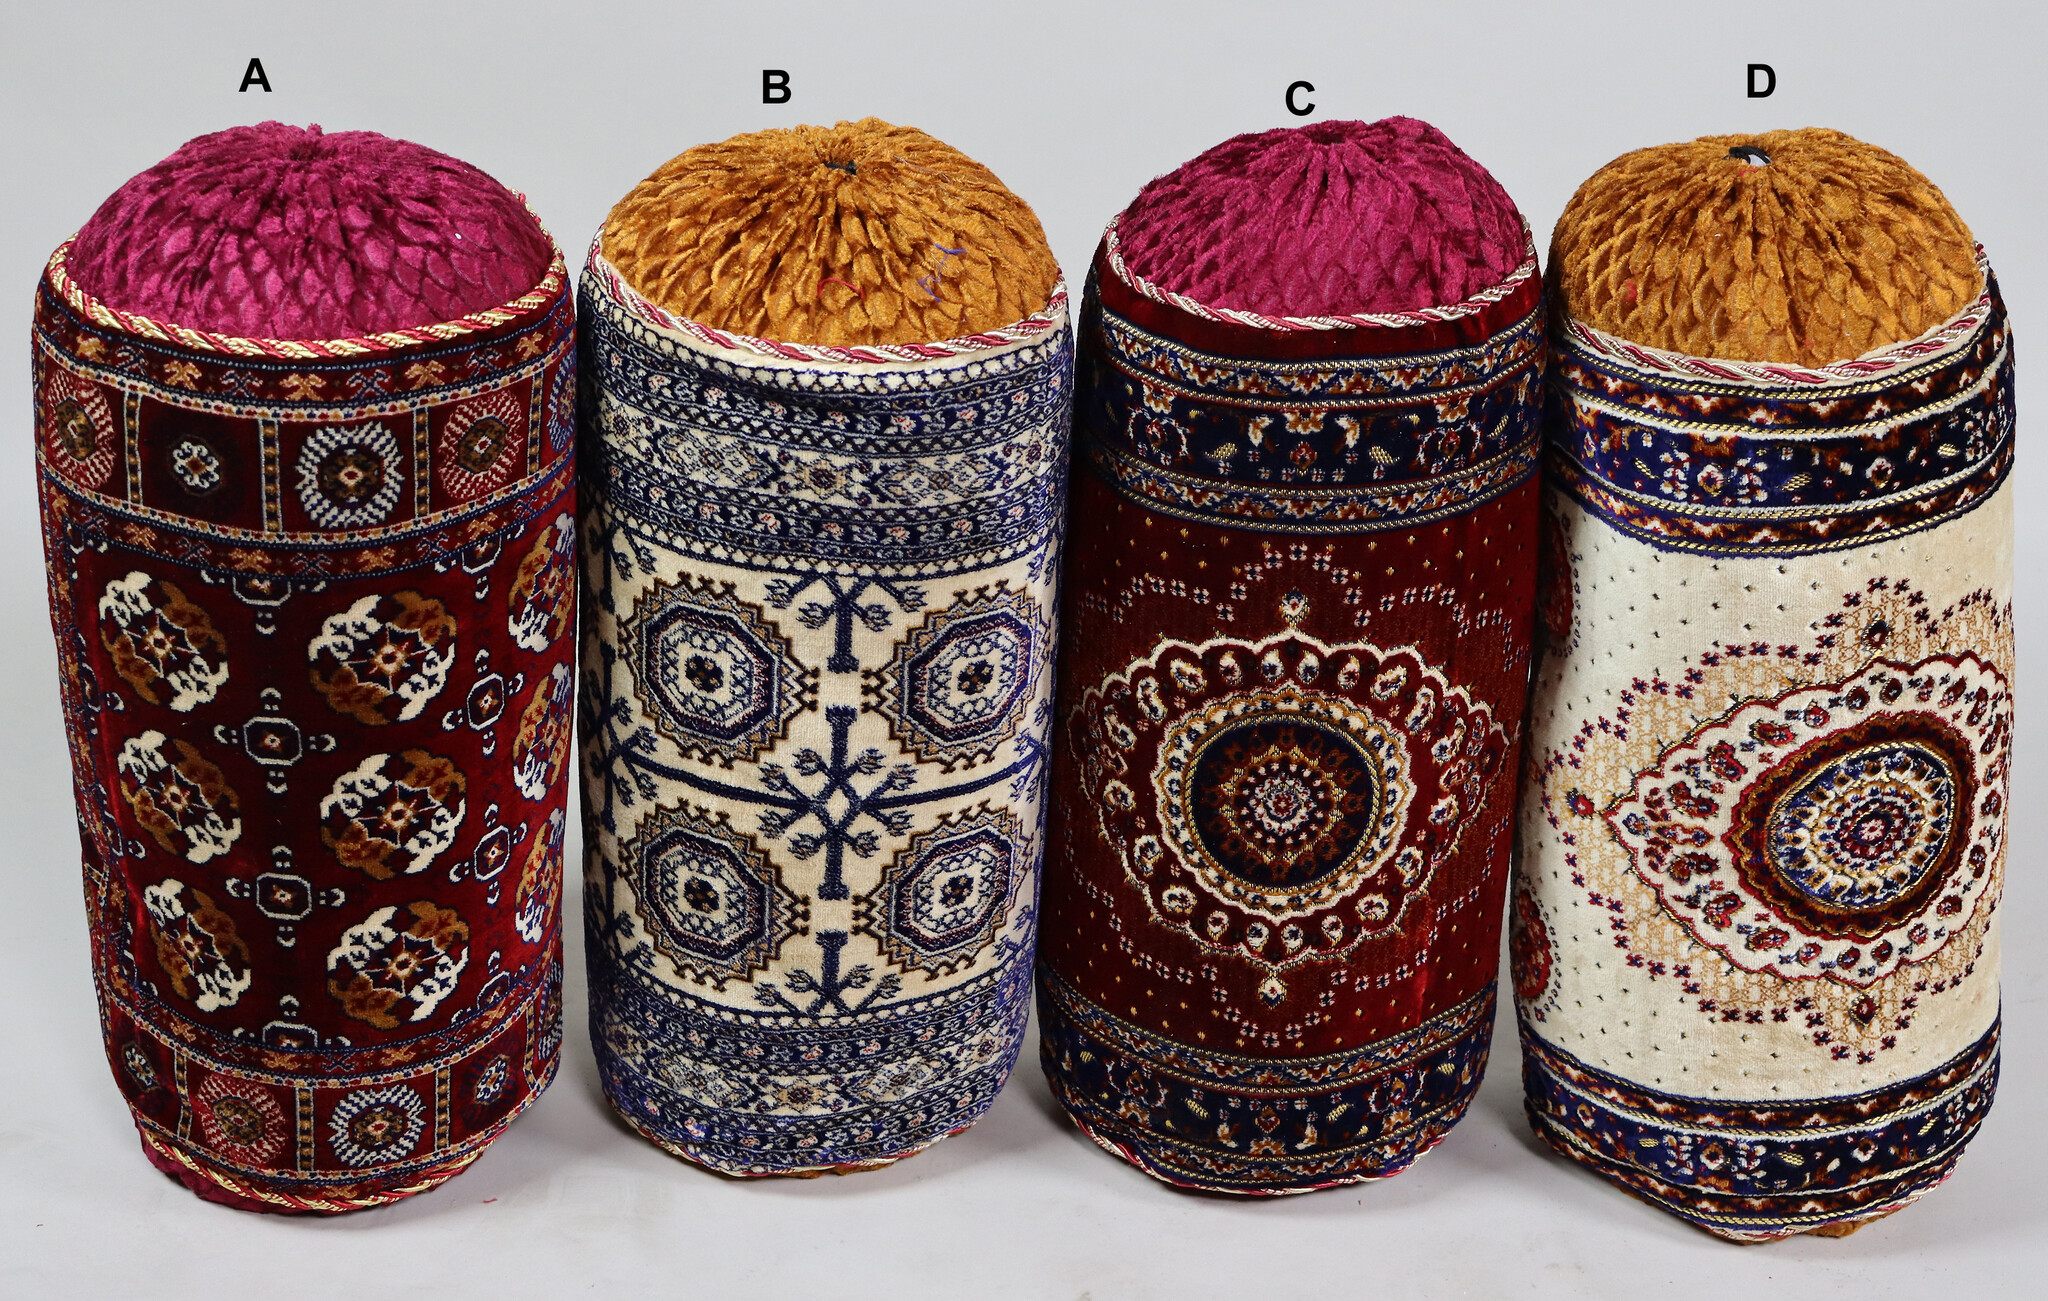 70x25 cm orient Afghan nomad rug  cushions  Roll pillow cushion  Turkmen 1001 night  BOLSTER  (4 motifs)